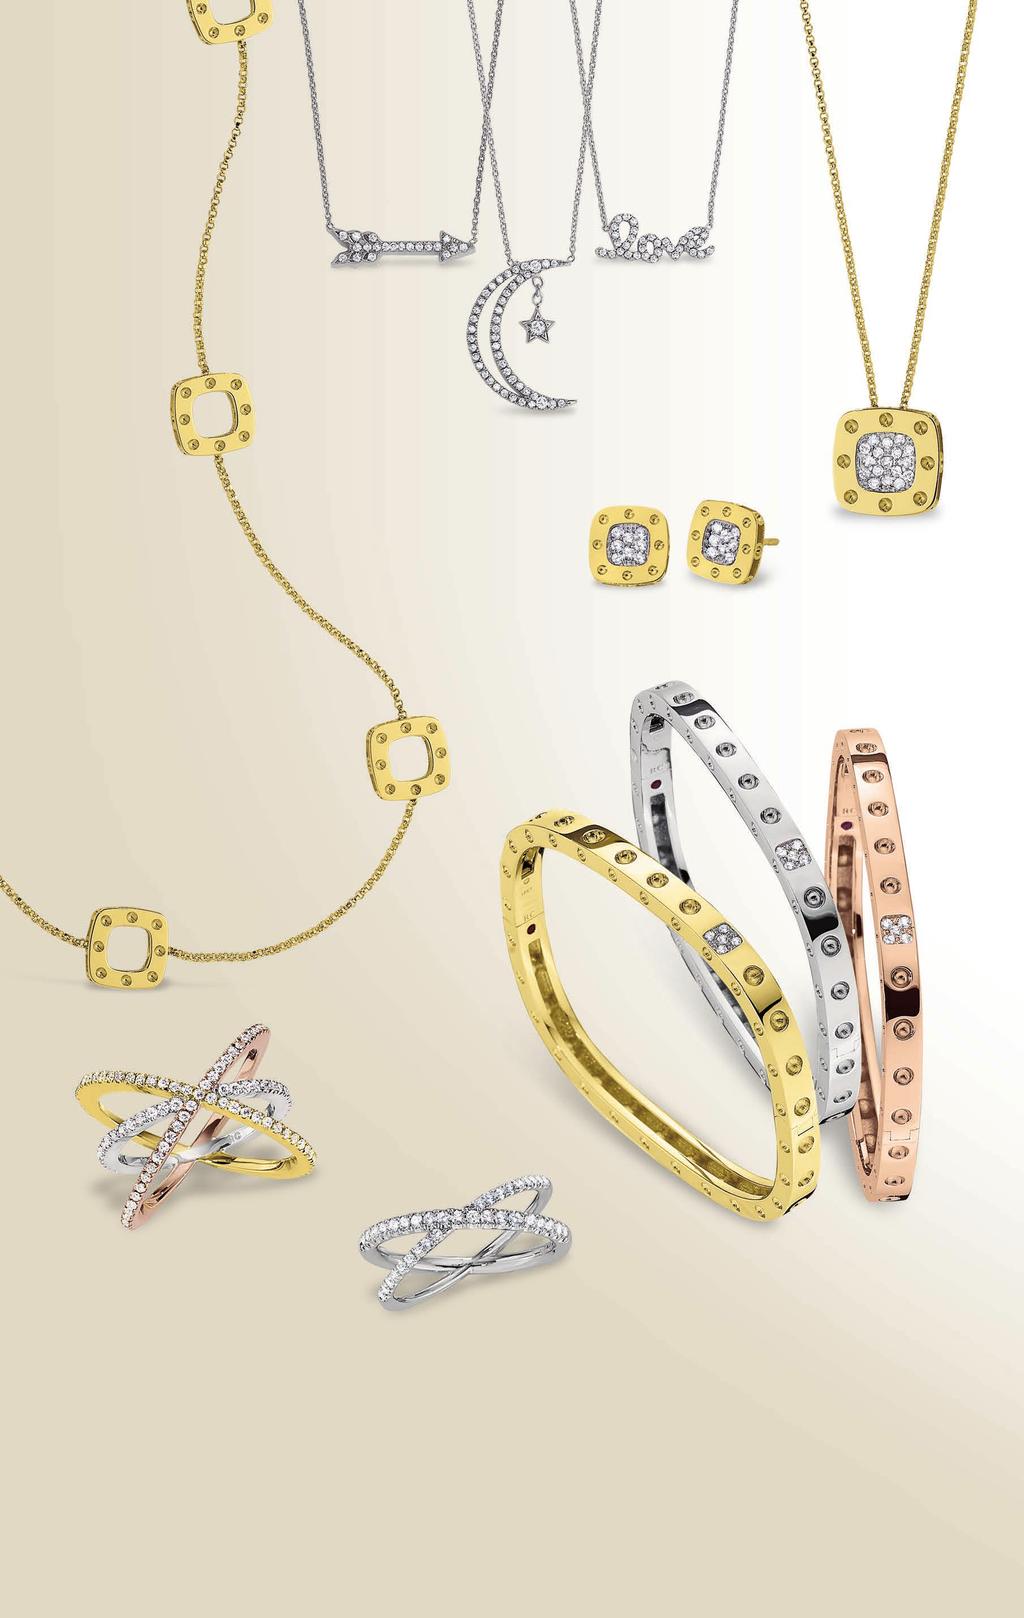 A I G H A. Pois Moi necklace, $3,900. Tiny Treasures diamond arrow necklace, $900. Tiny Treasures diamond half moon necklace, $1,580. Tiny Treasures diamond Love necklace, $1,100.